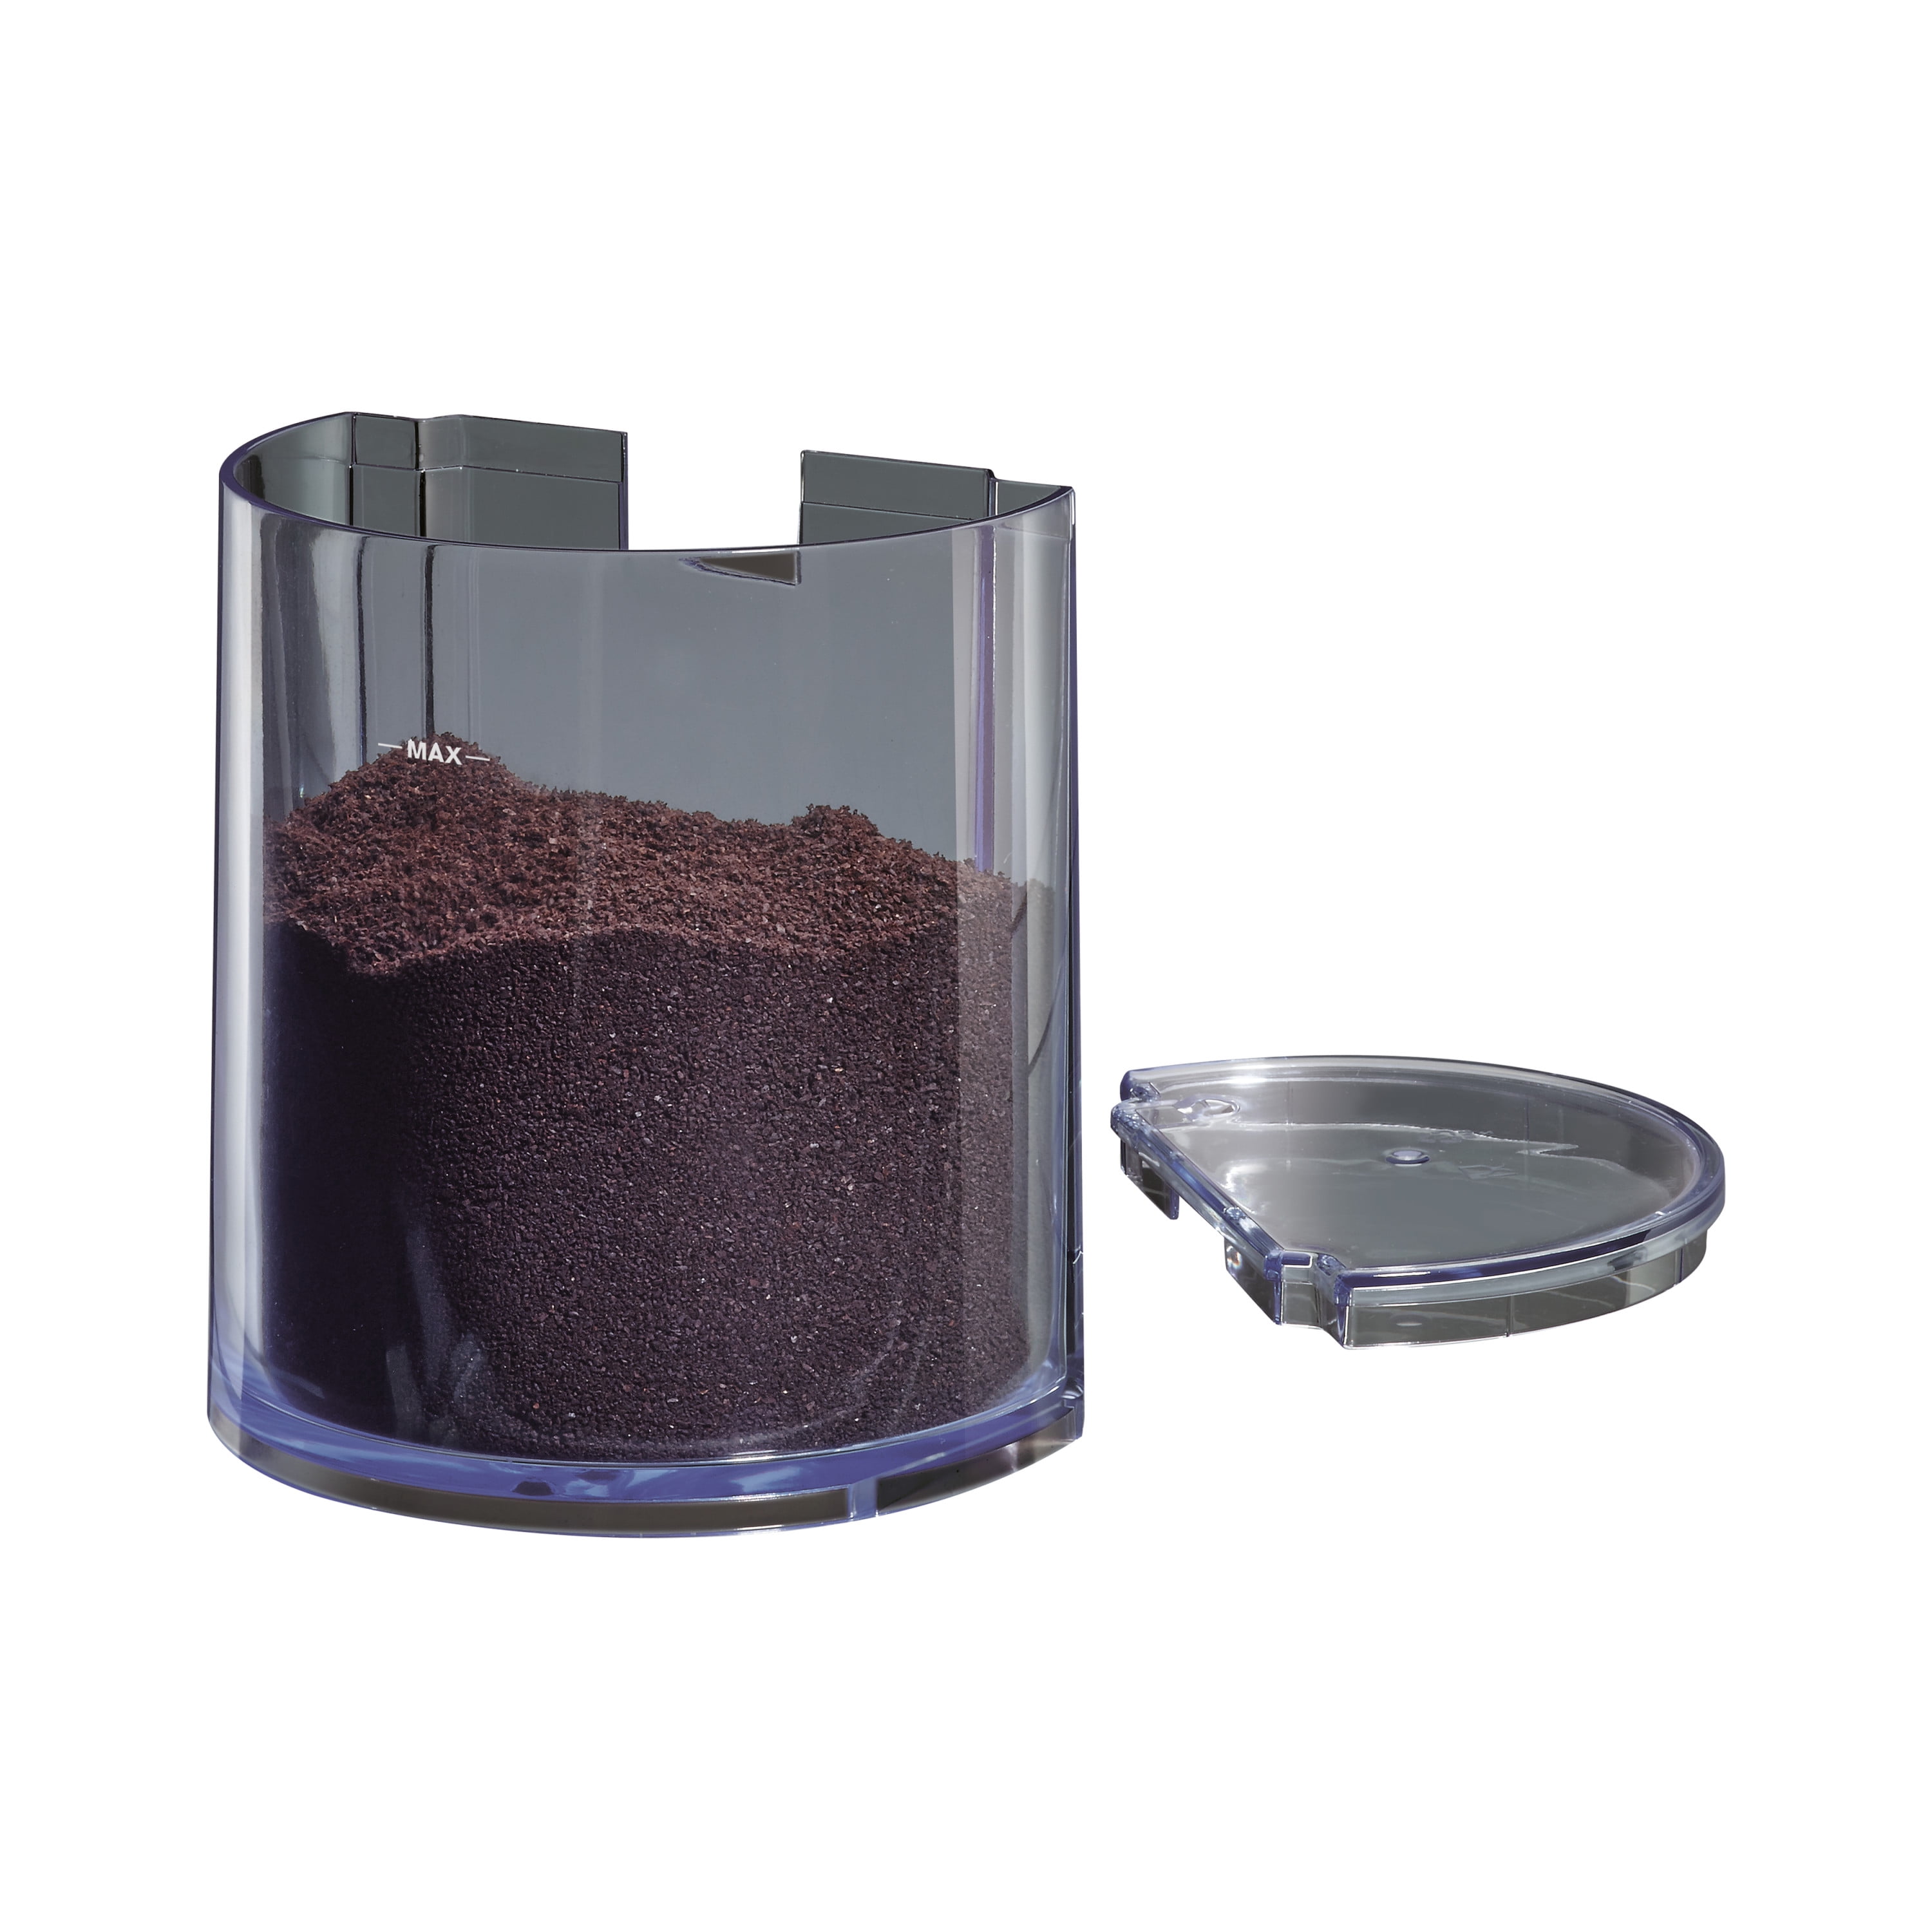 KRUPS GX500 Coffee Grinder Black Precision Flat Burr 12 Cup 12